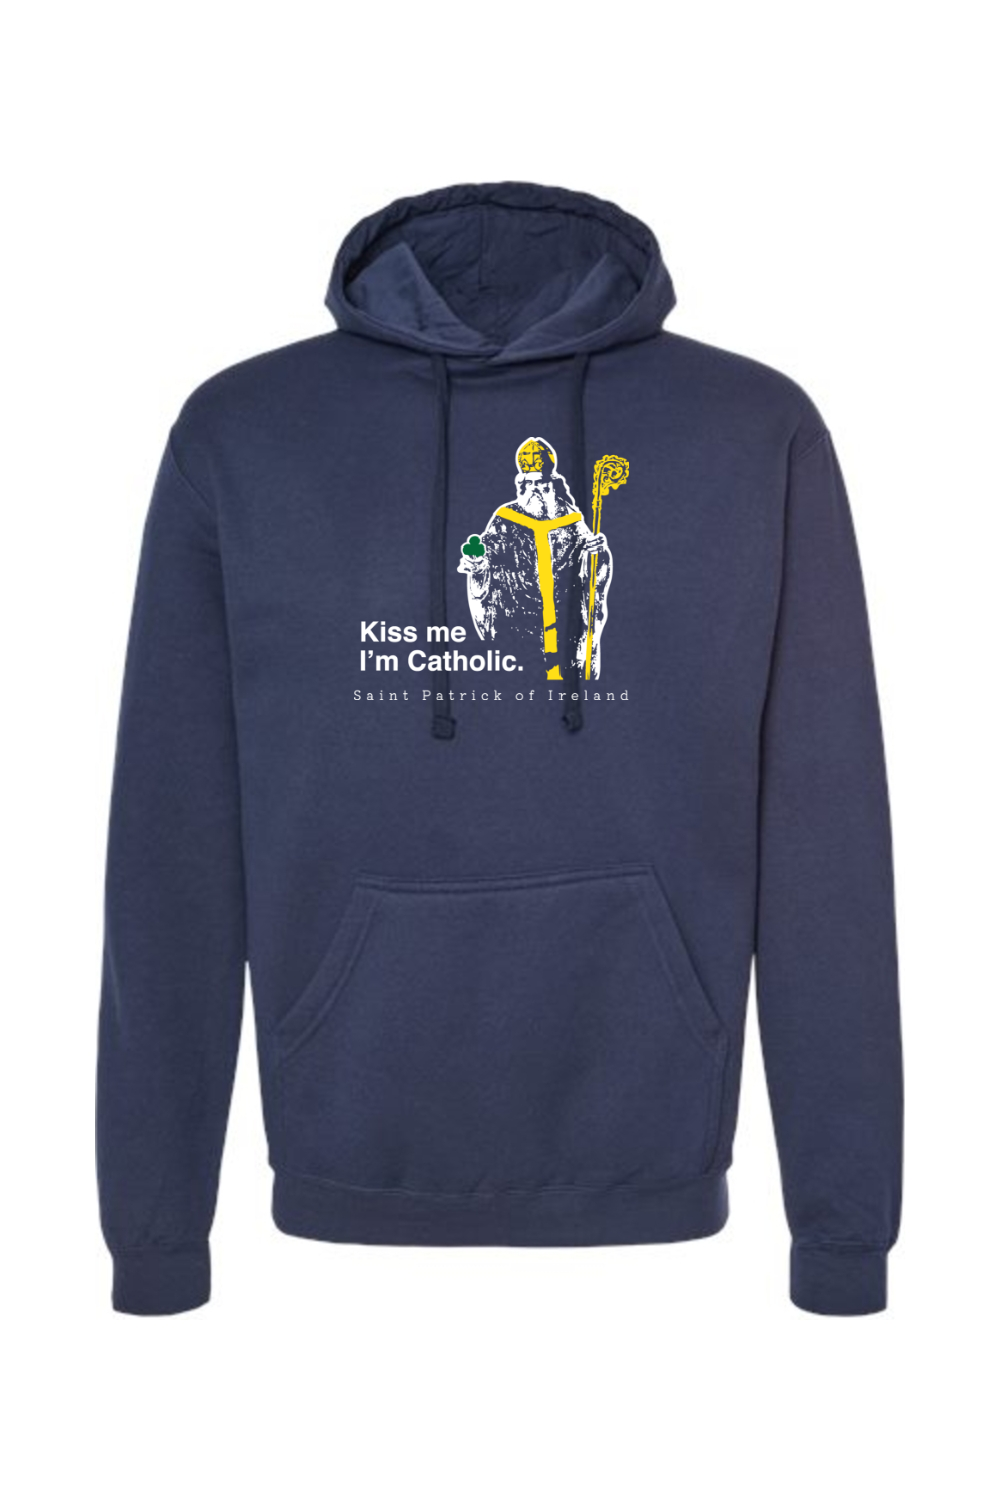 Kiss Me, I'm Catholic - St. Patrick of Ireland Hoodie Sweatshirt